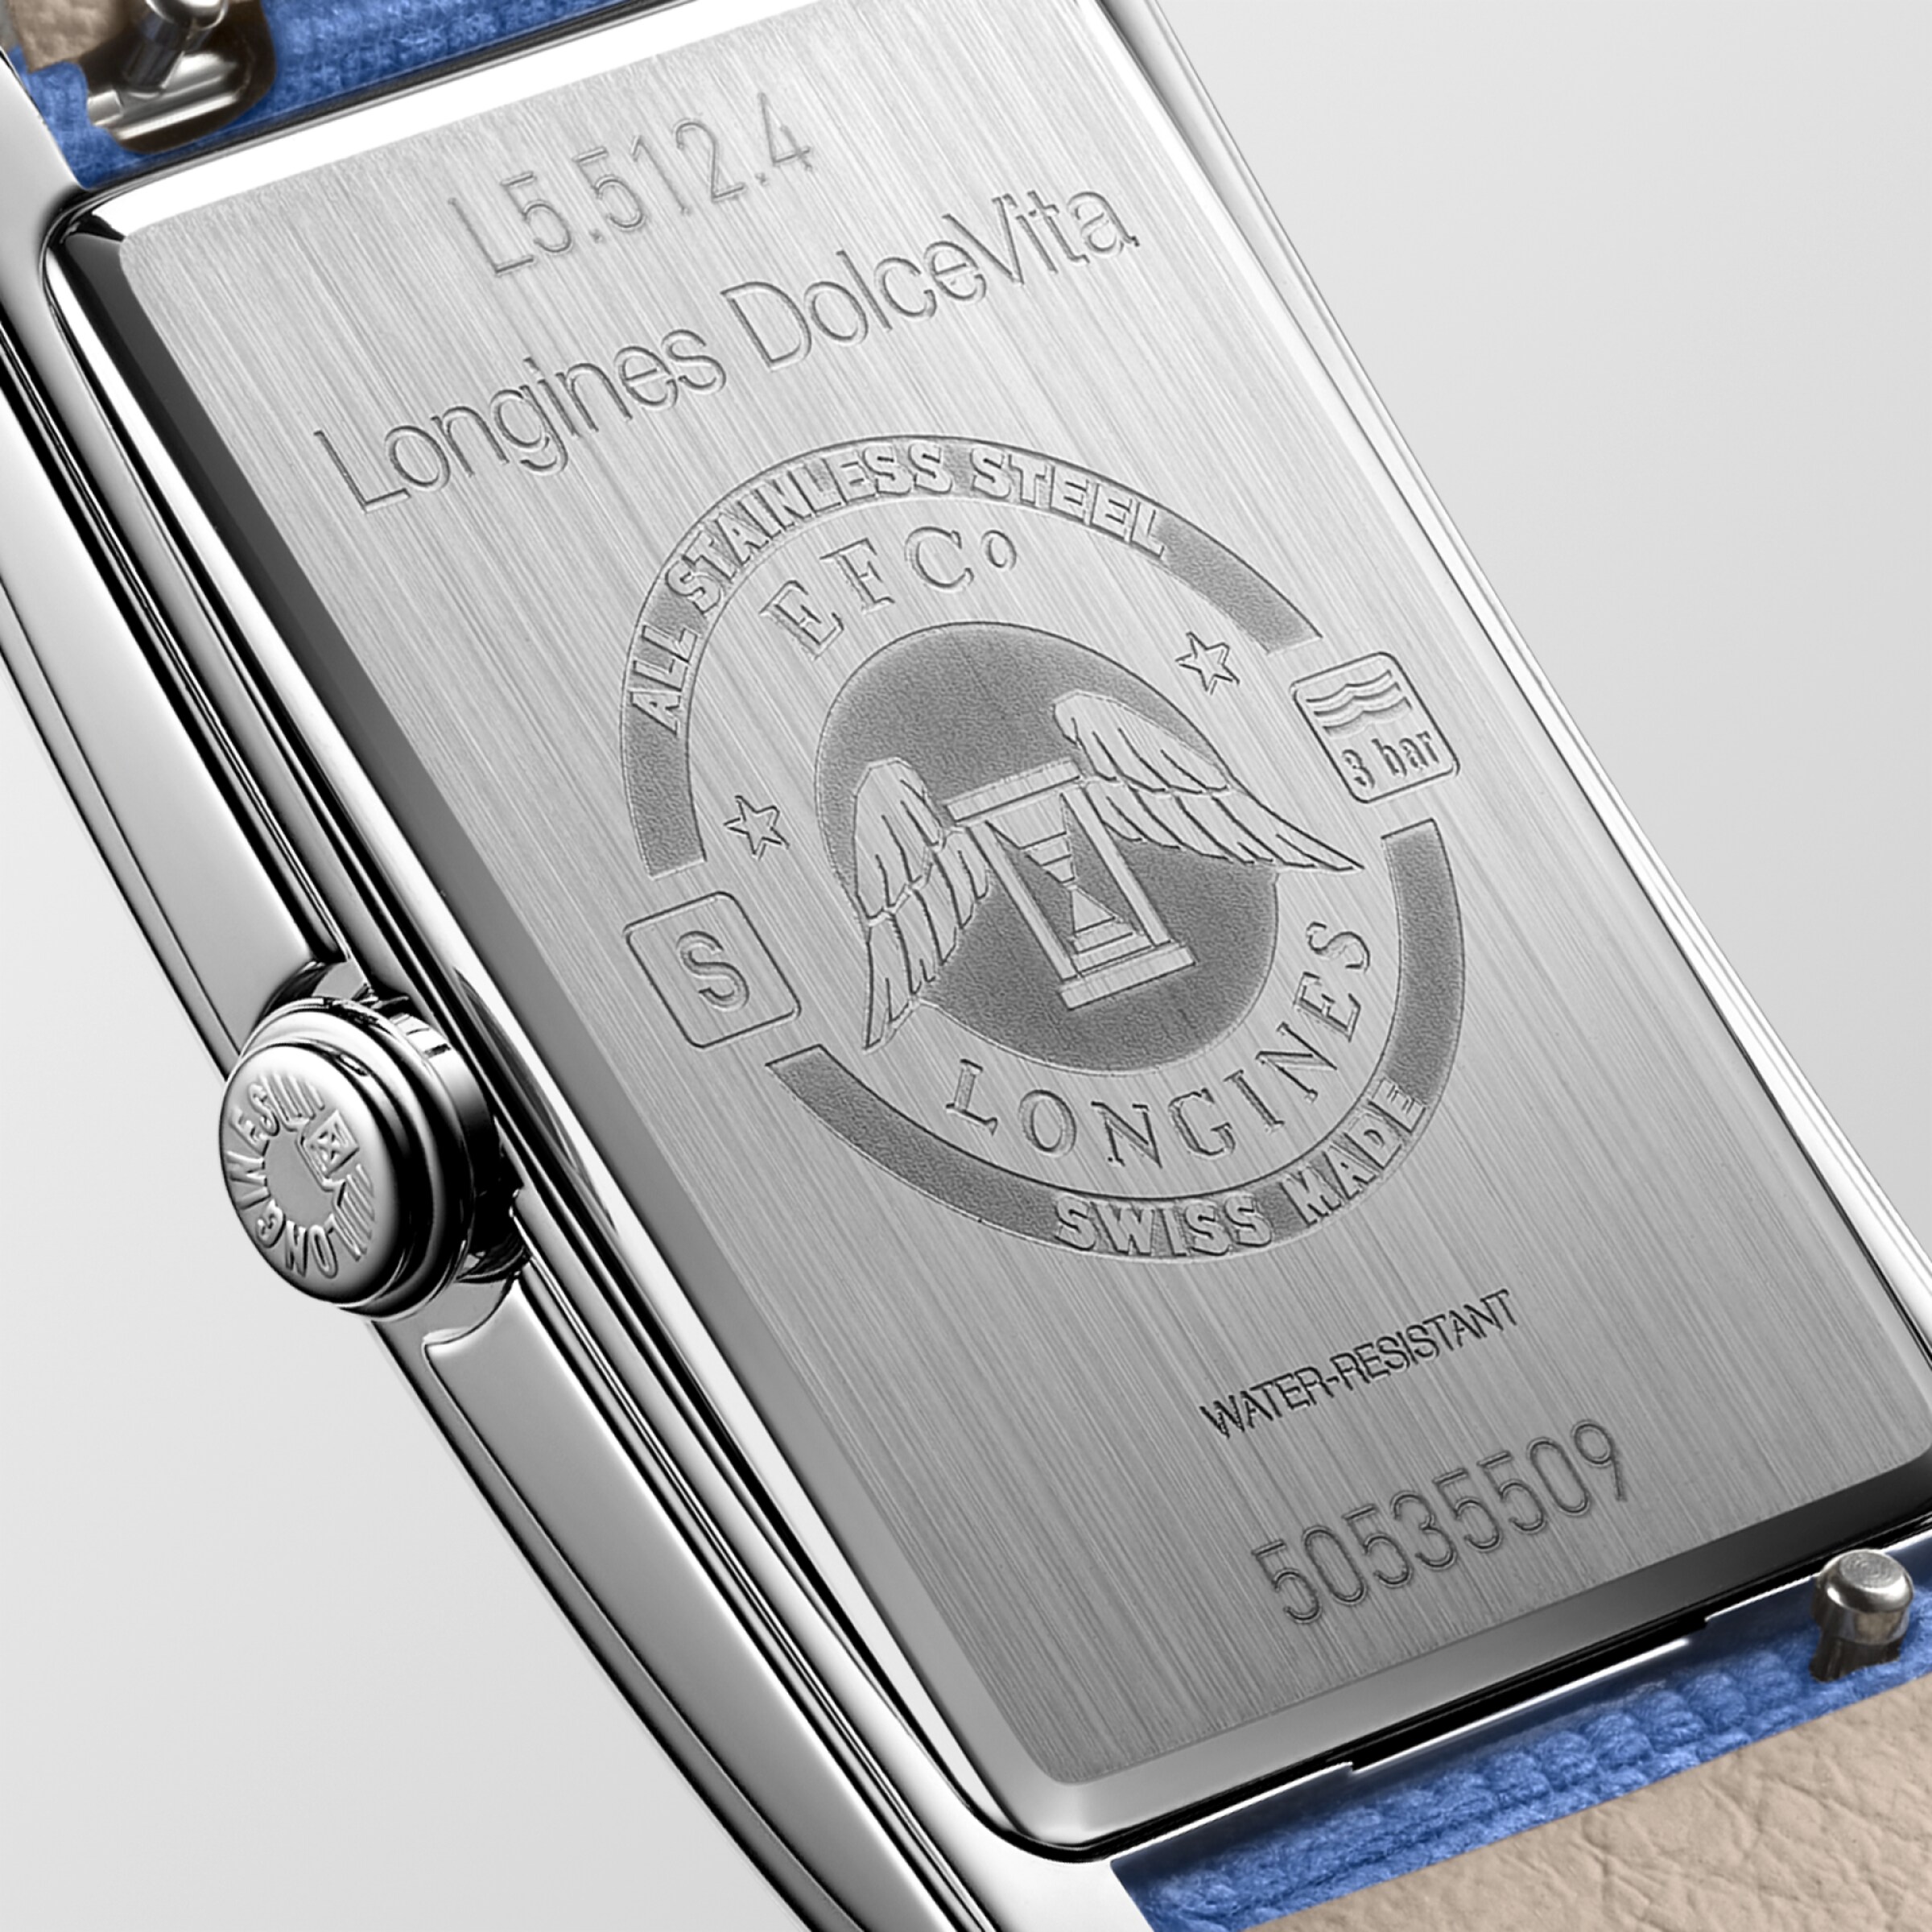 Longines DOLCEVITA Quartz Stainless steel Watch - L5.512.4.11.9